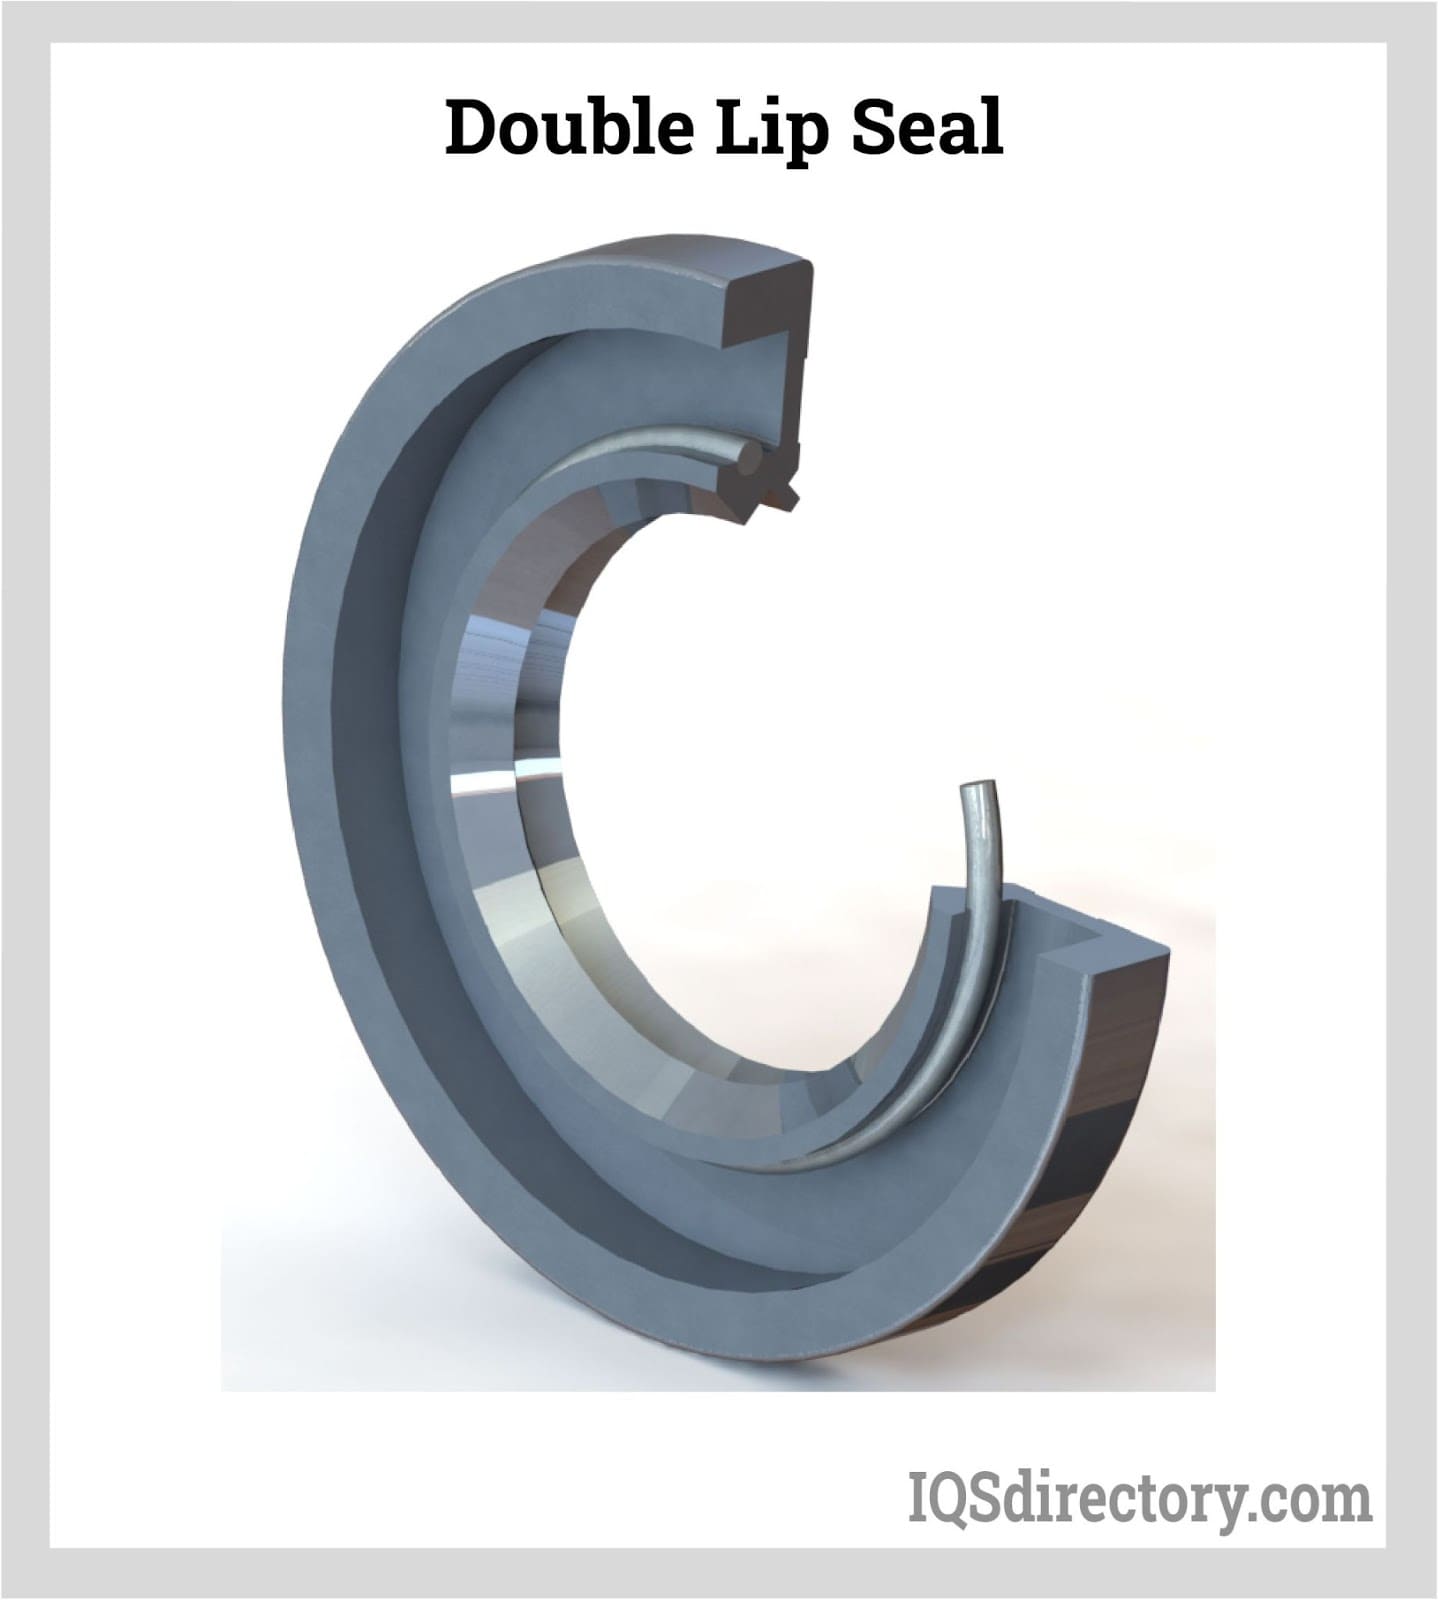 https://www.iqsdirectory.com/articles/hydraulic-seal/double-lip-seal.jpg